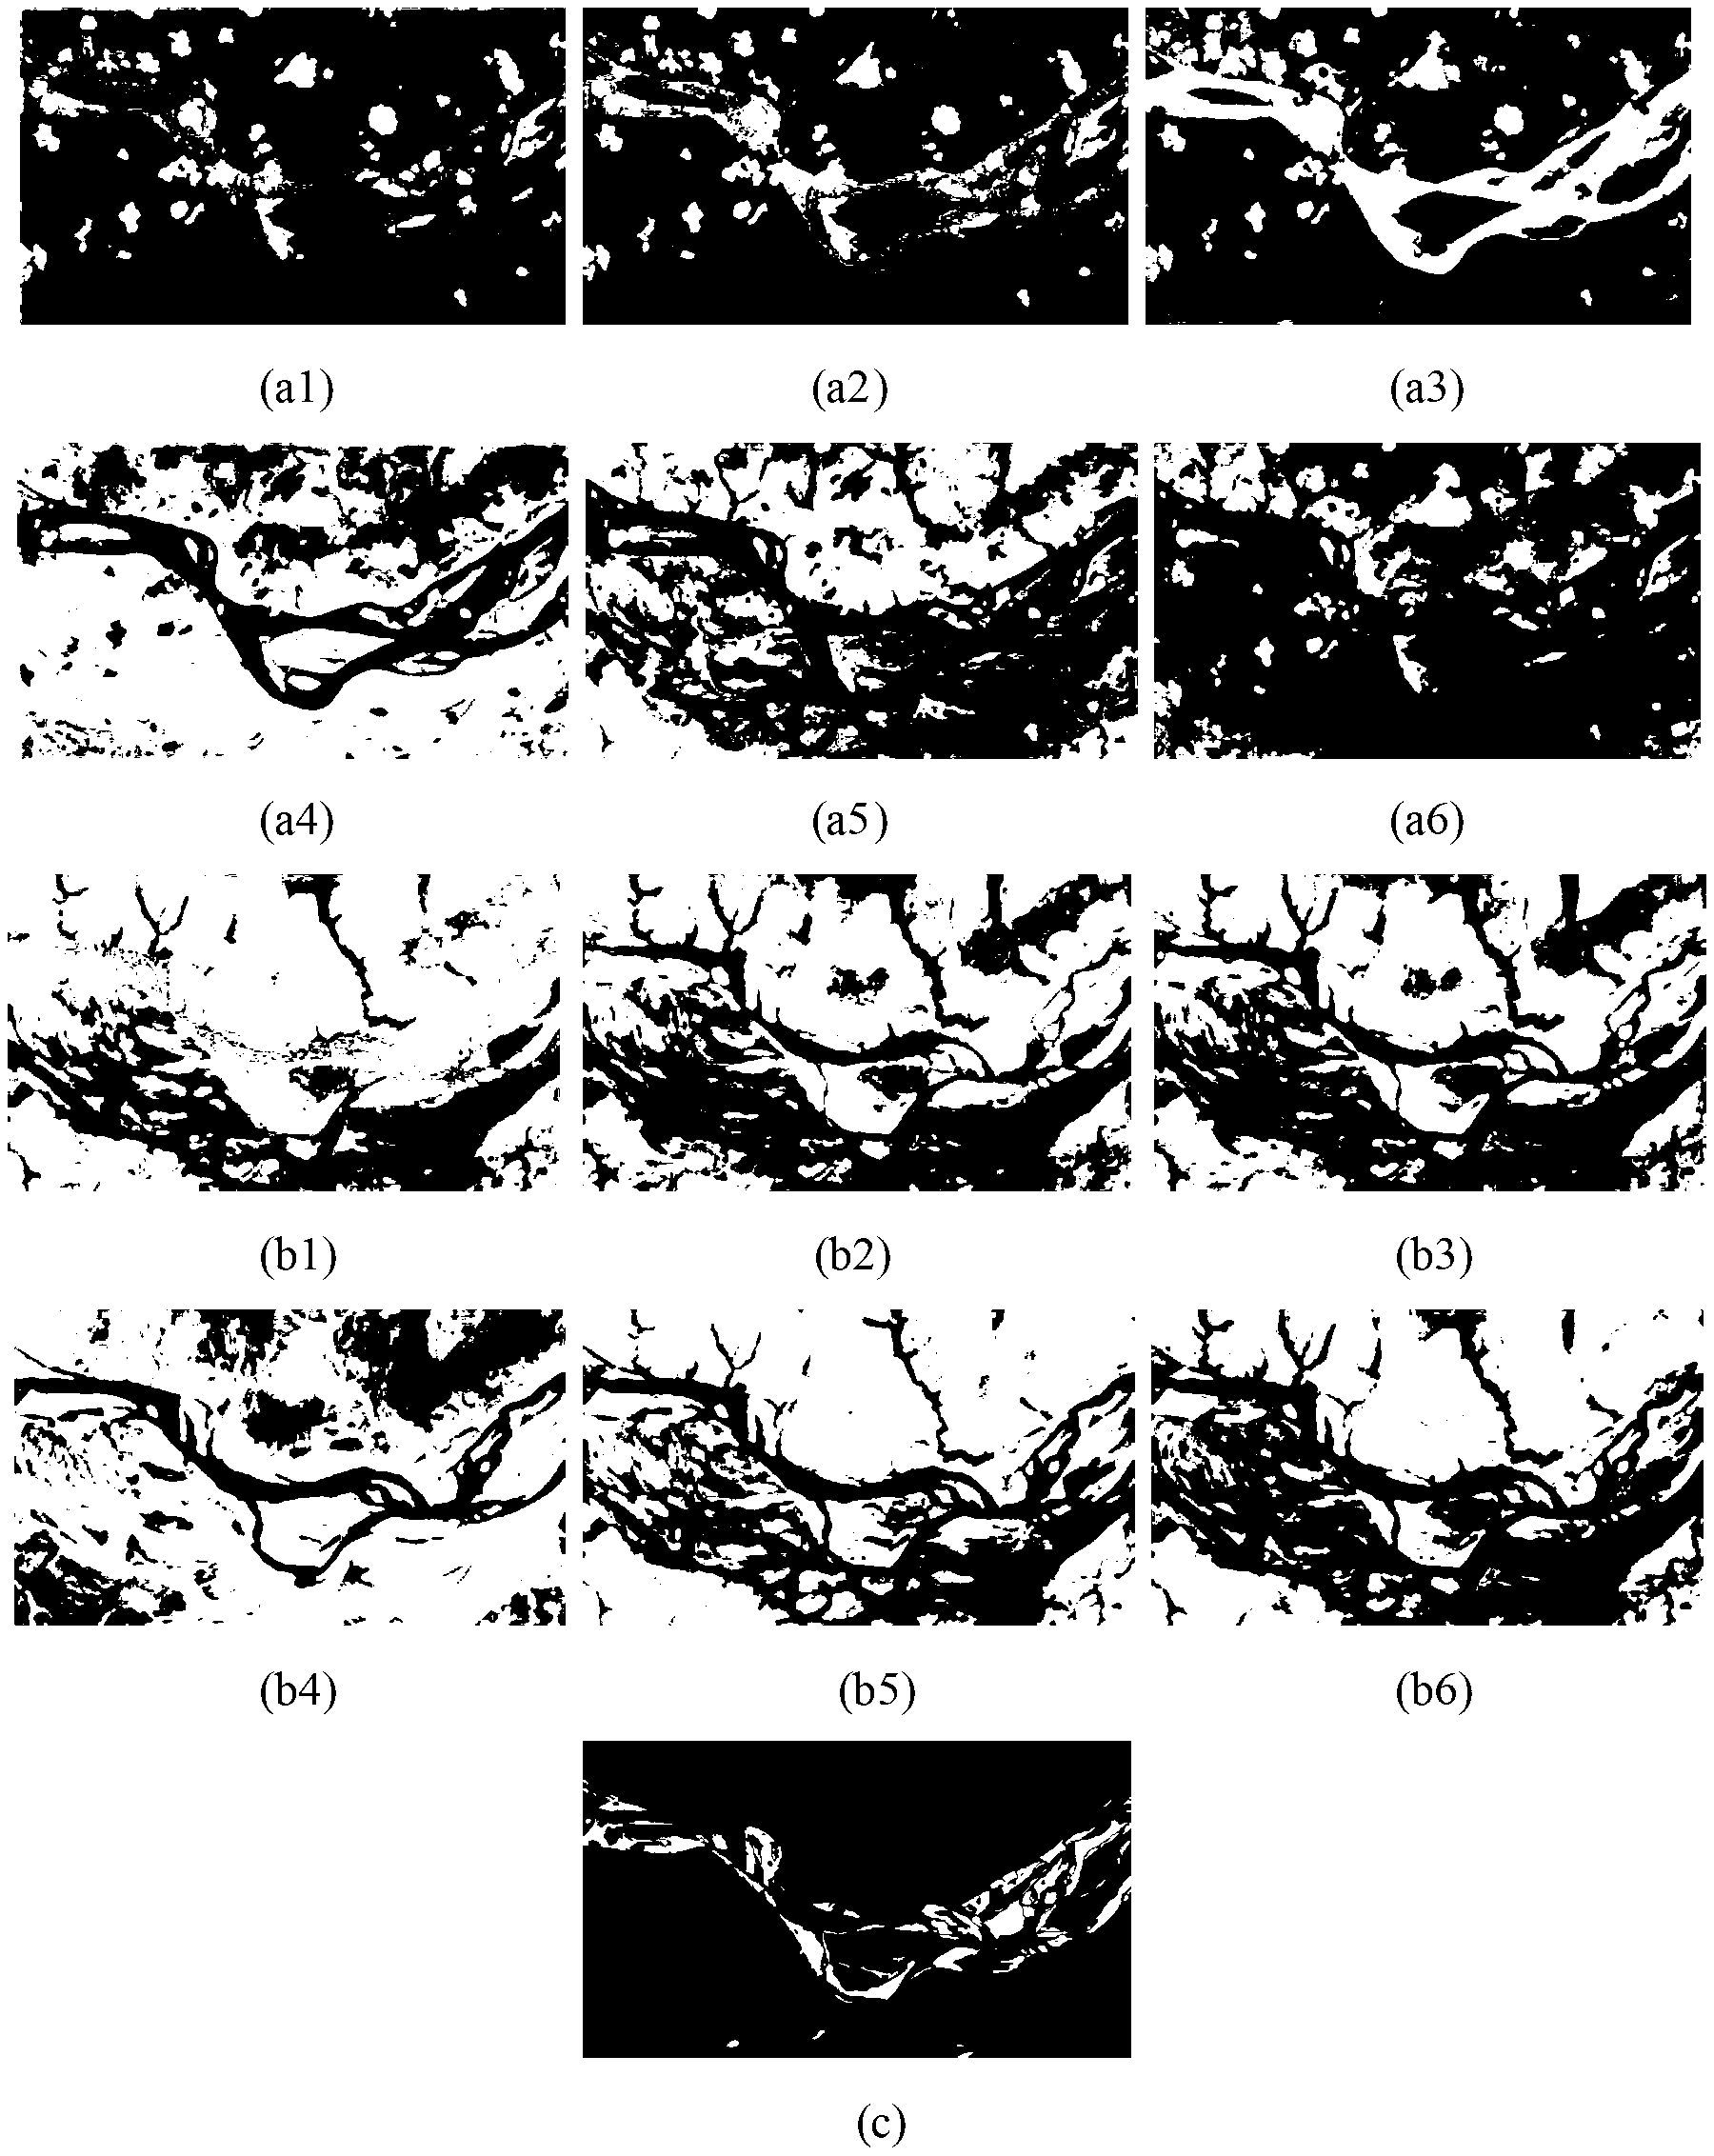 Multispectral remote sensing image variation detection method based on spectral reflectivity variation analysis